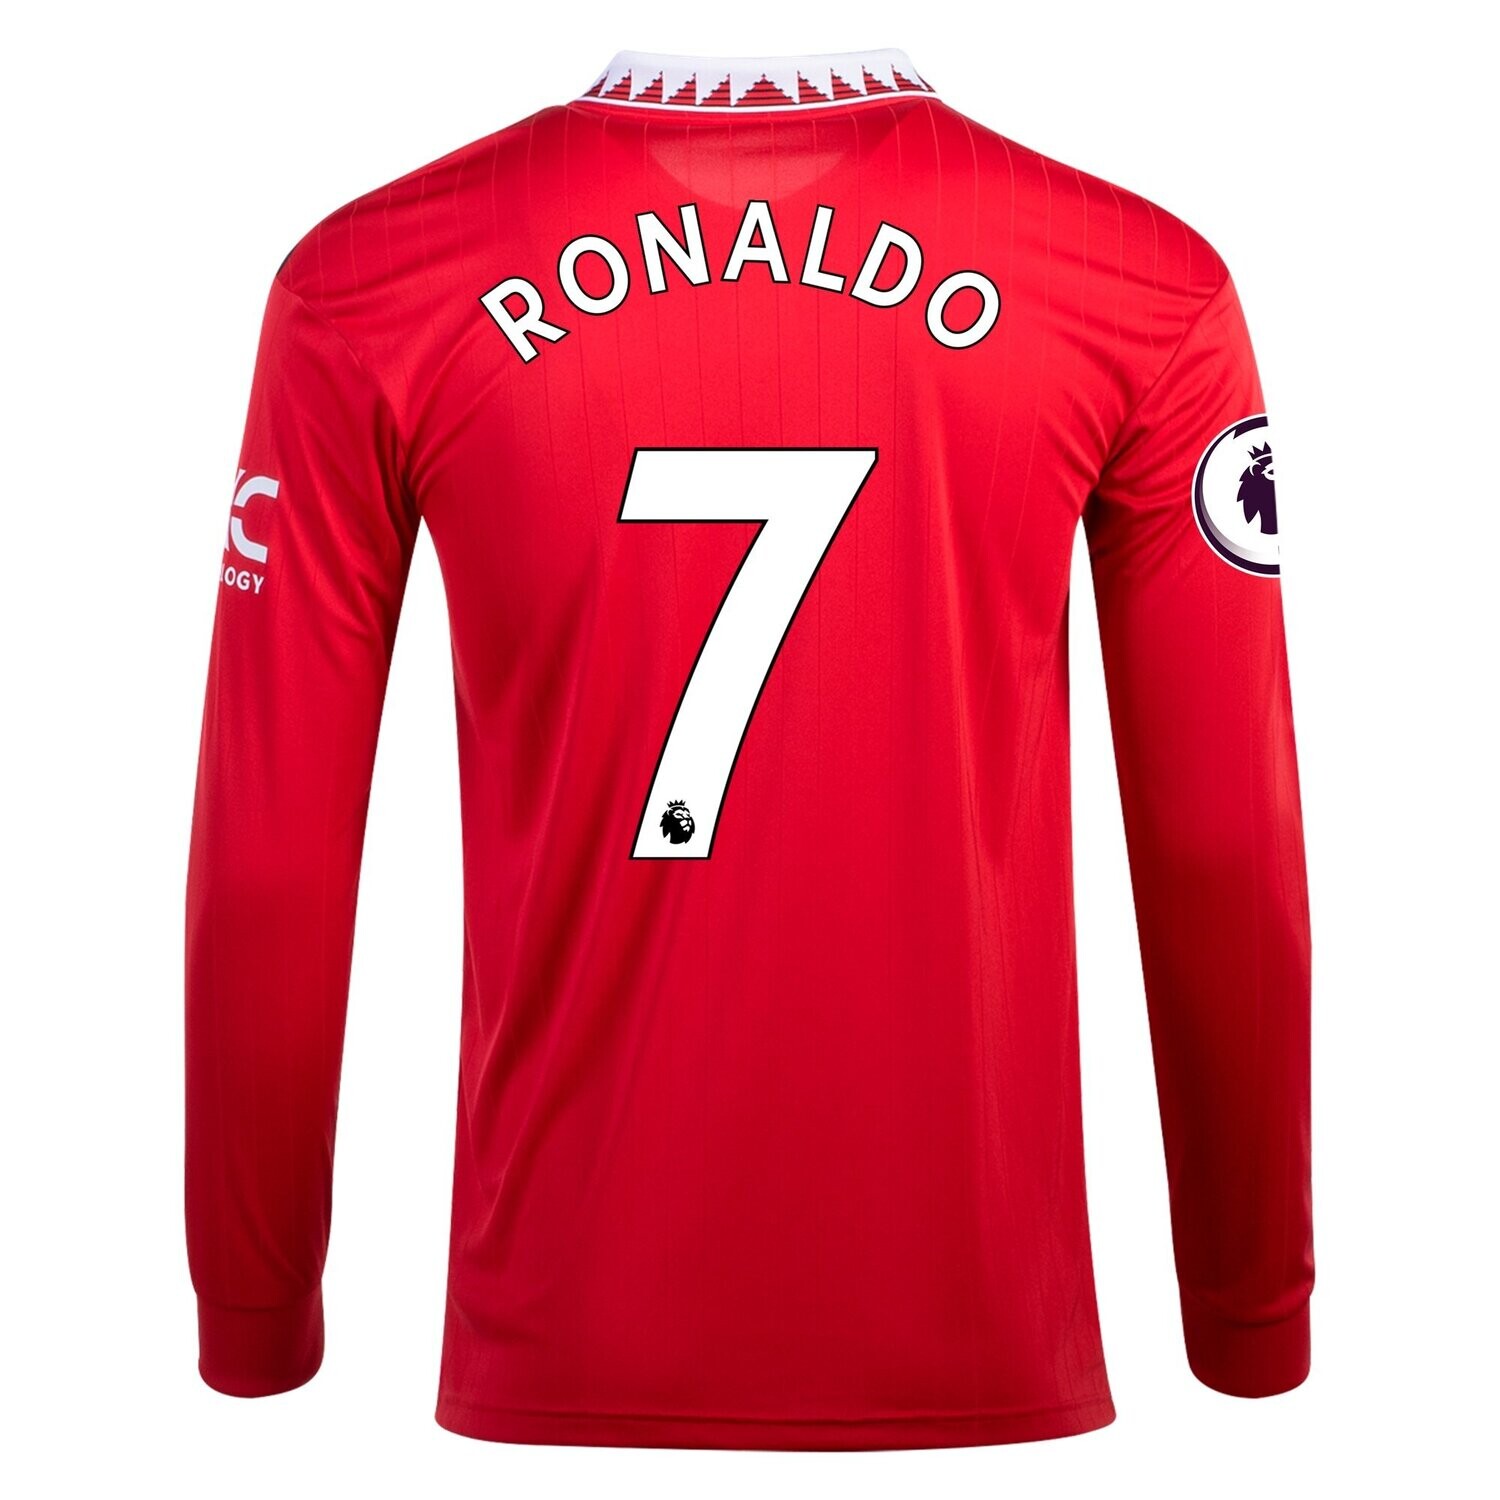 Ronaldo #7 Manchester United Home Long Sleeve Jersey 22-23